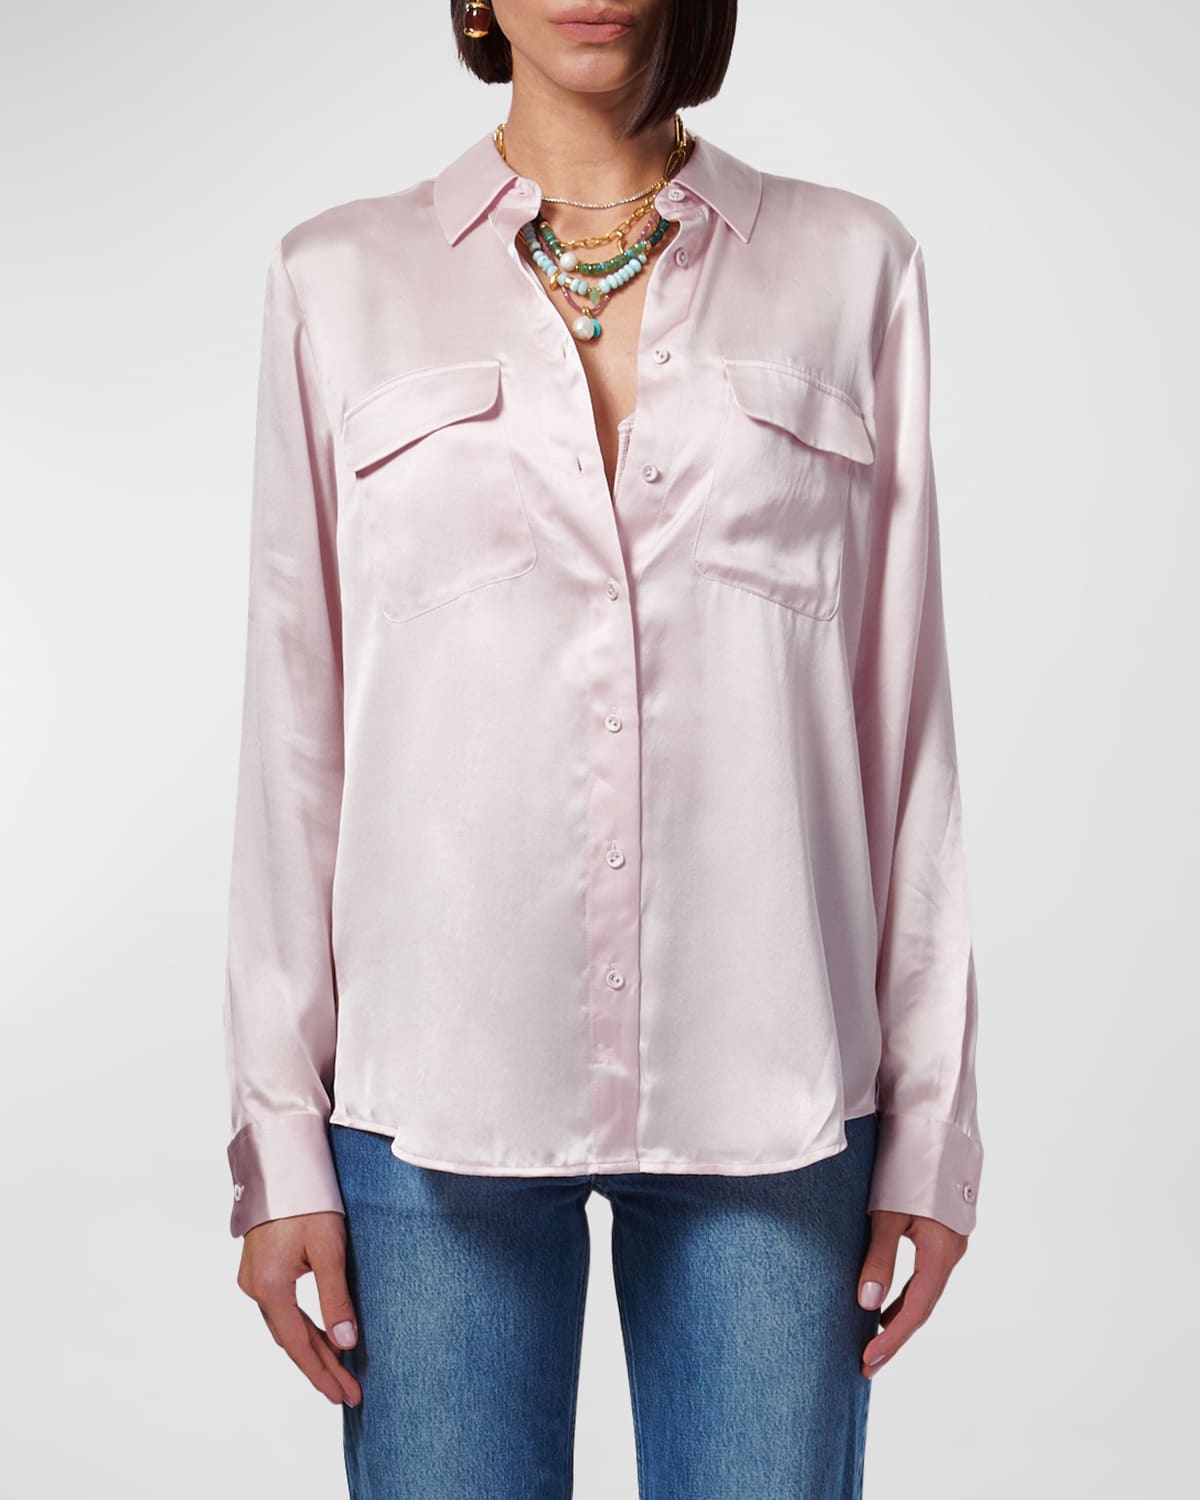 Cami NYC Rachelle Silk Charmeuse Button-Front Shirt